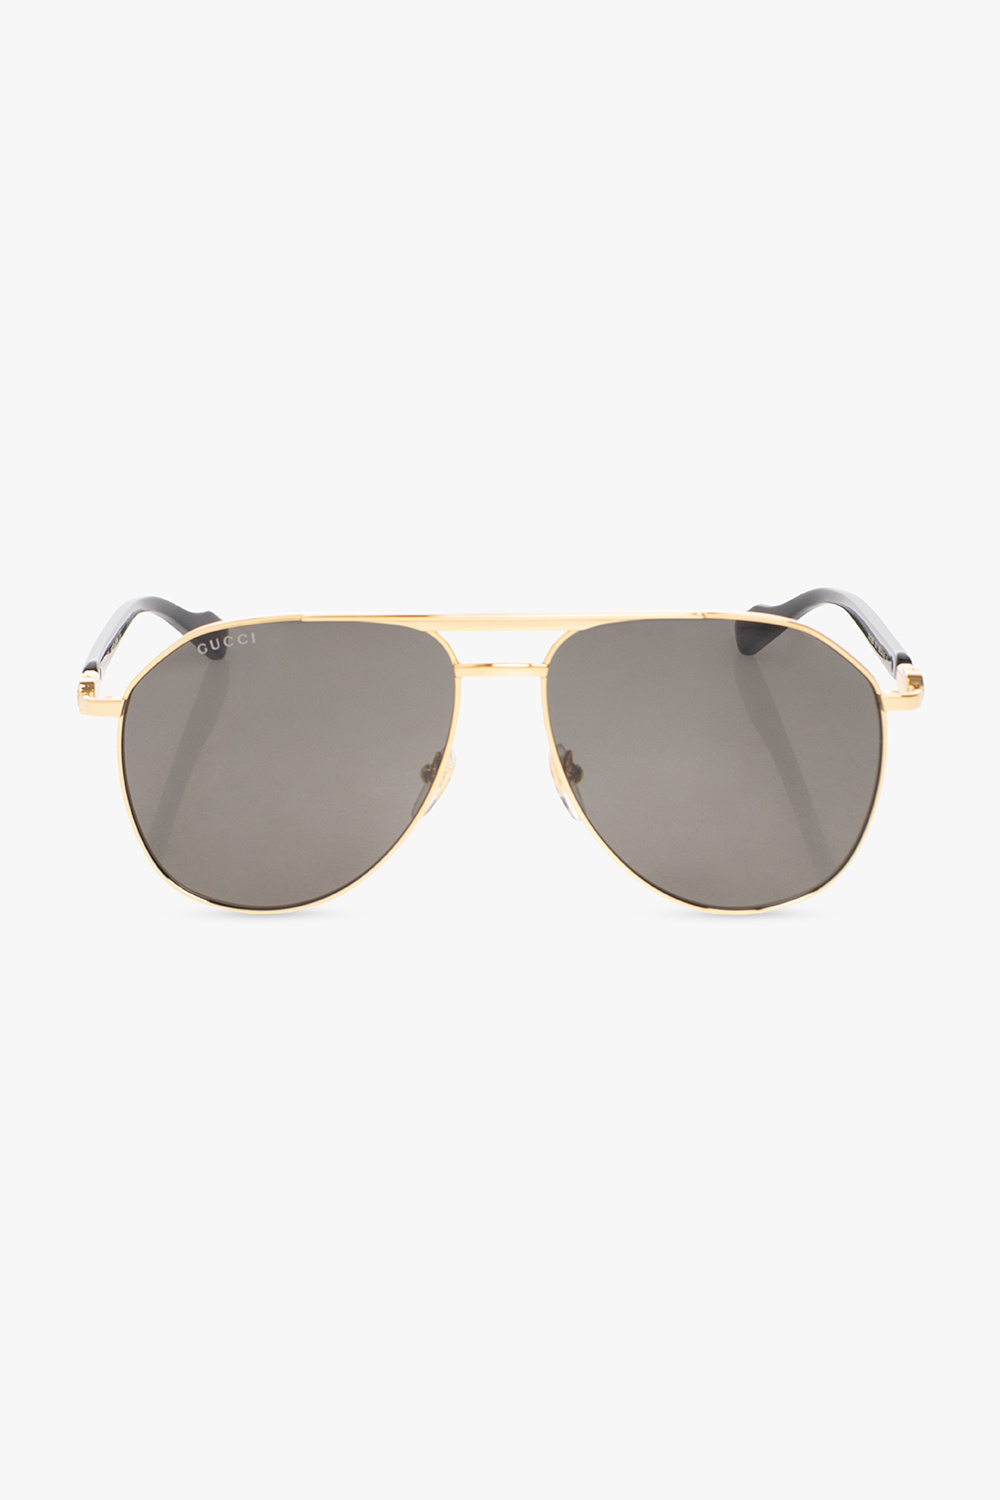 Gucci burberry icon stripe rectangular frame sunglasses VB610S item